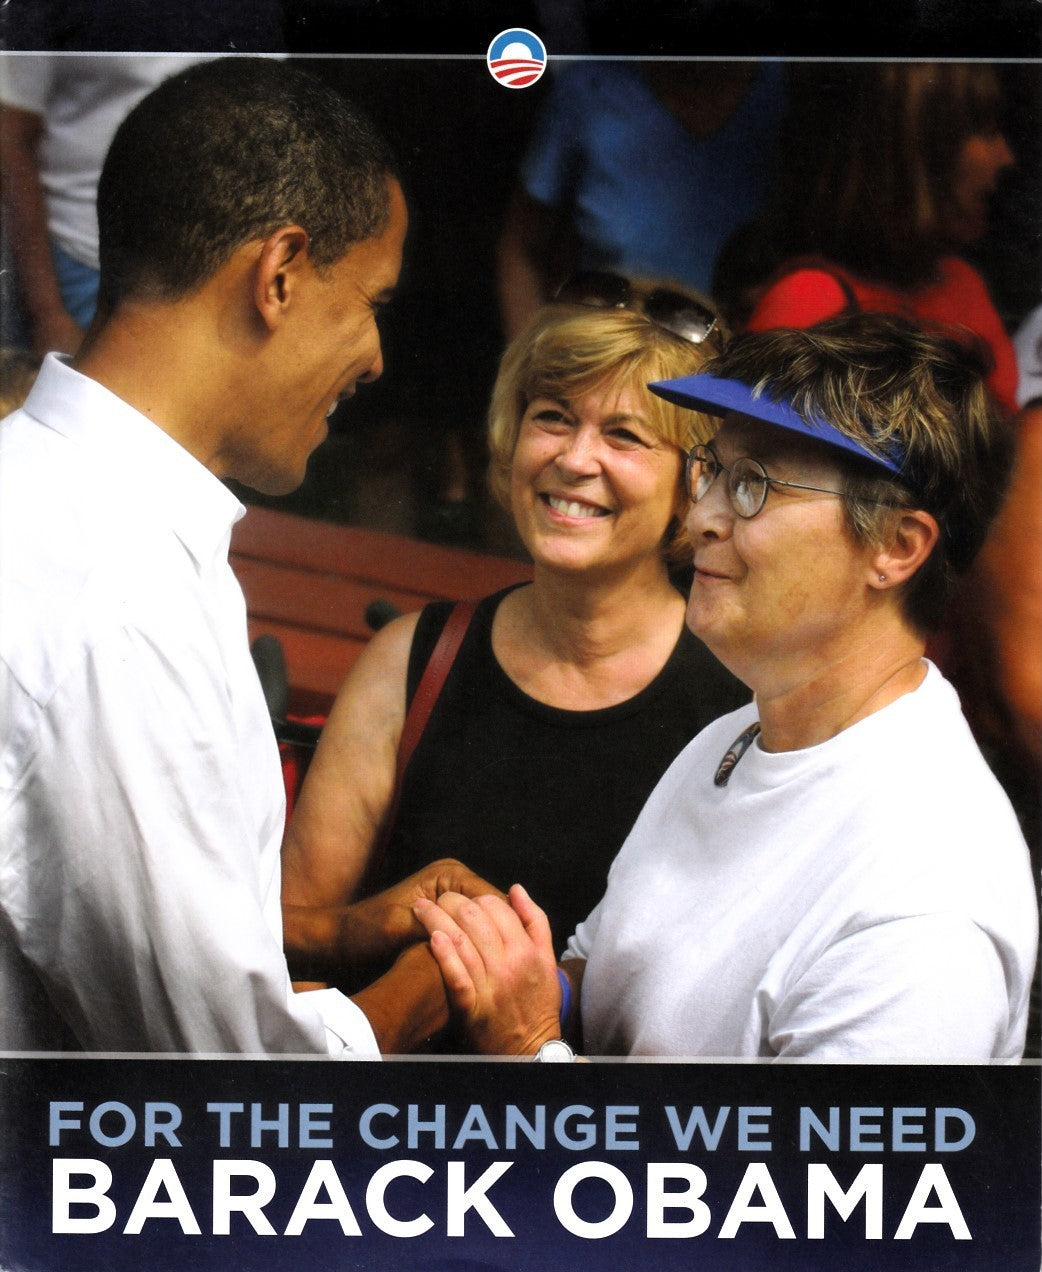 Barack Obama 2008 Iowa Caucus presidential campaign booklet